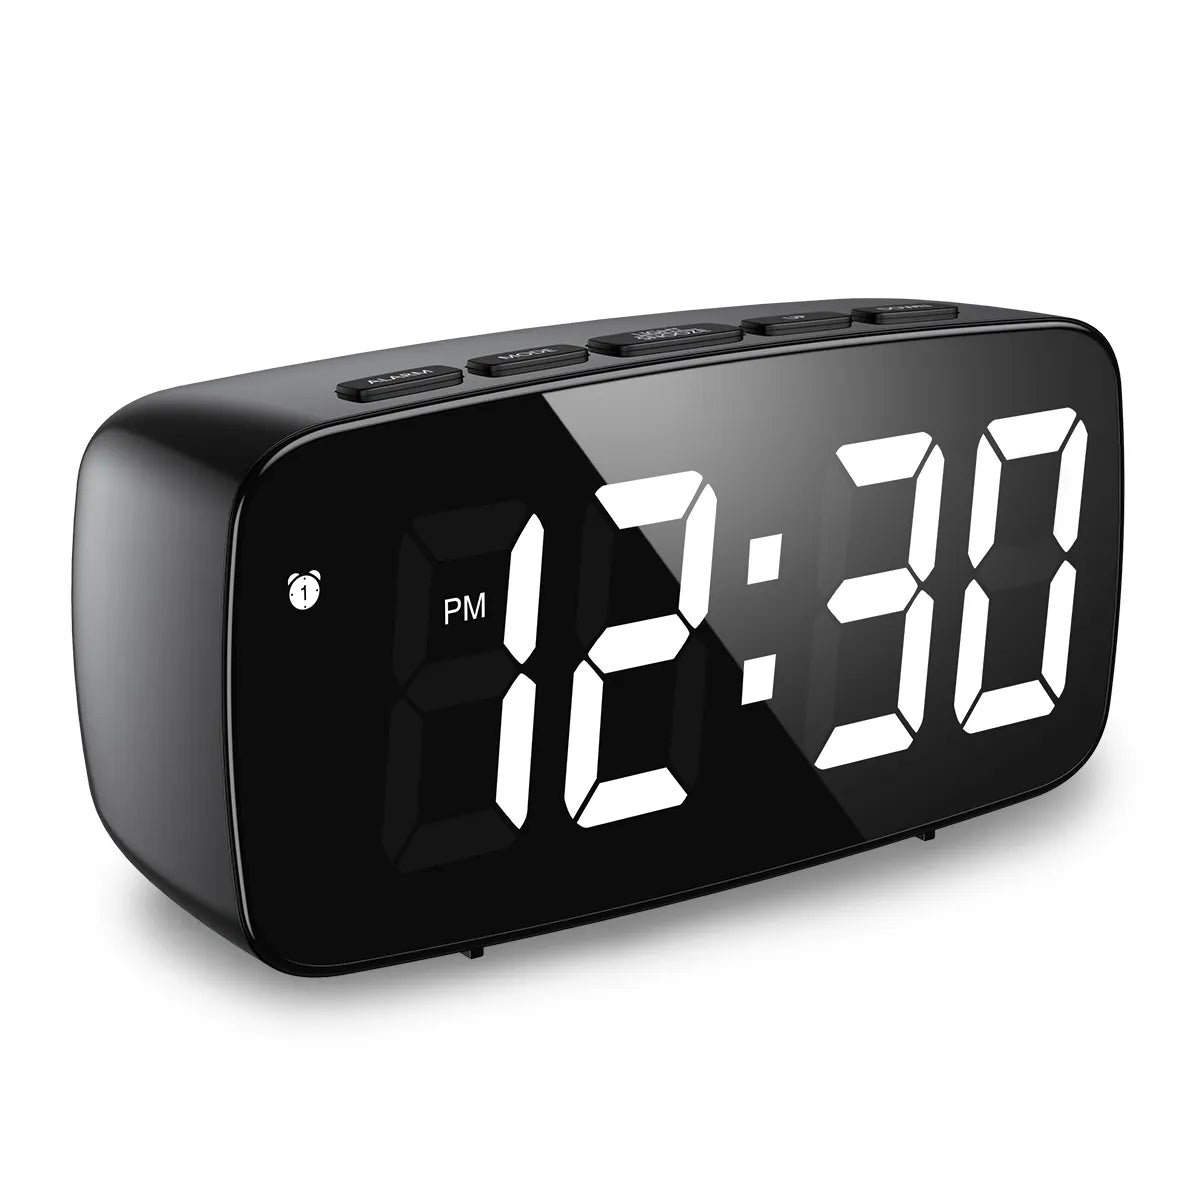 Digital LED Clock Alarm Clock Voice Control Snooze Time Temperature Display Night Mode Desktop Clocks